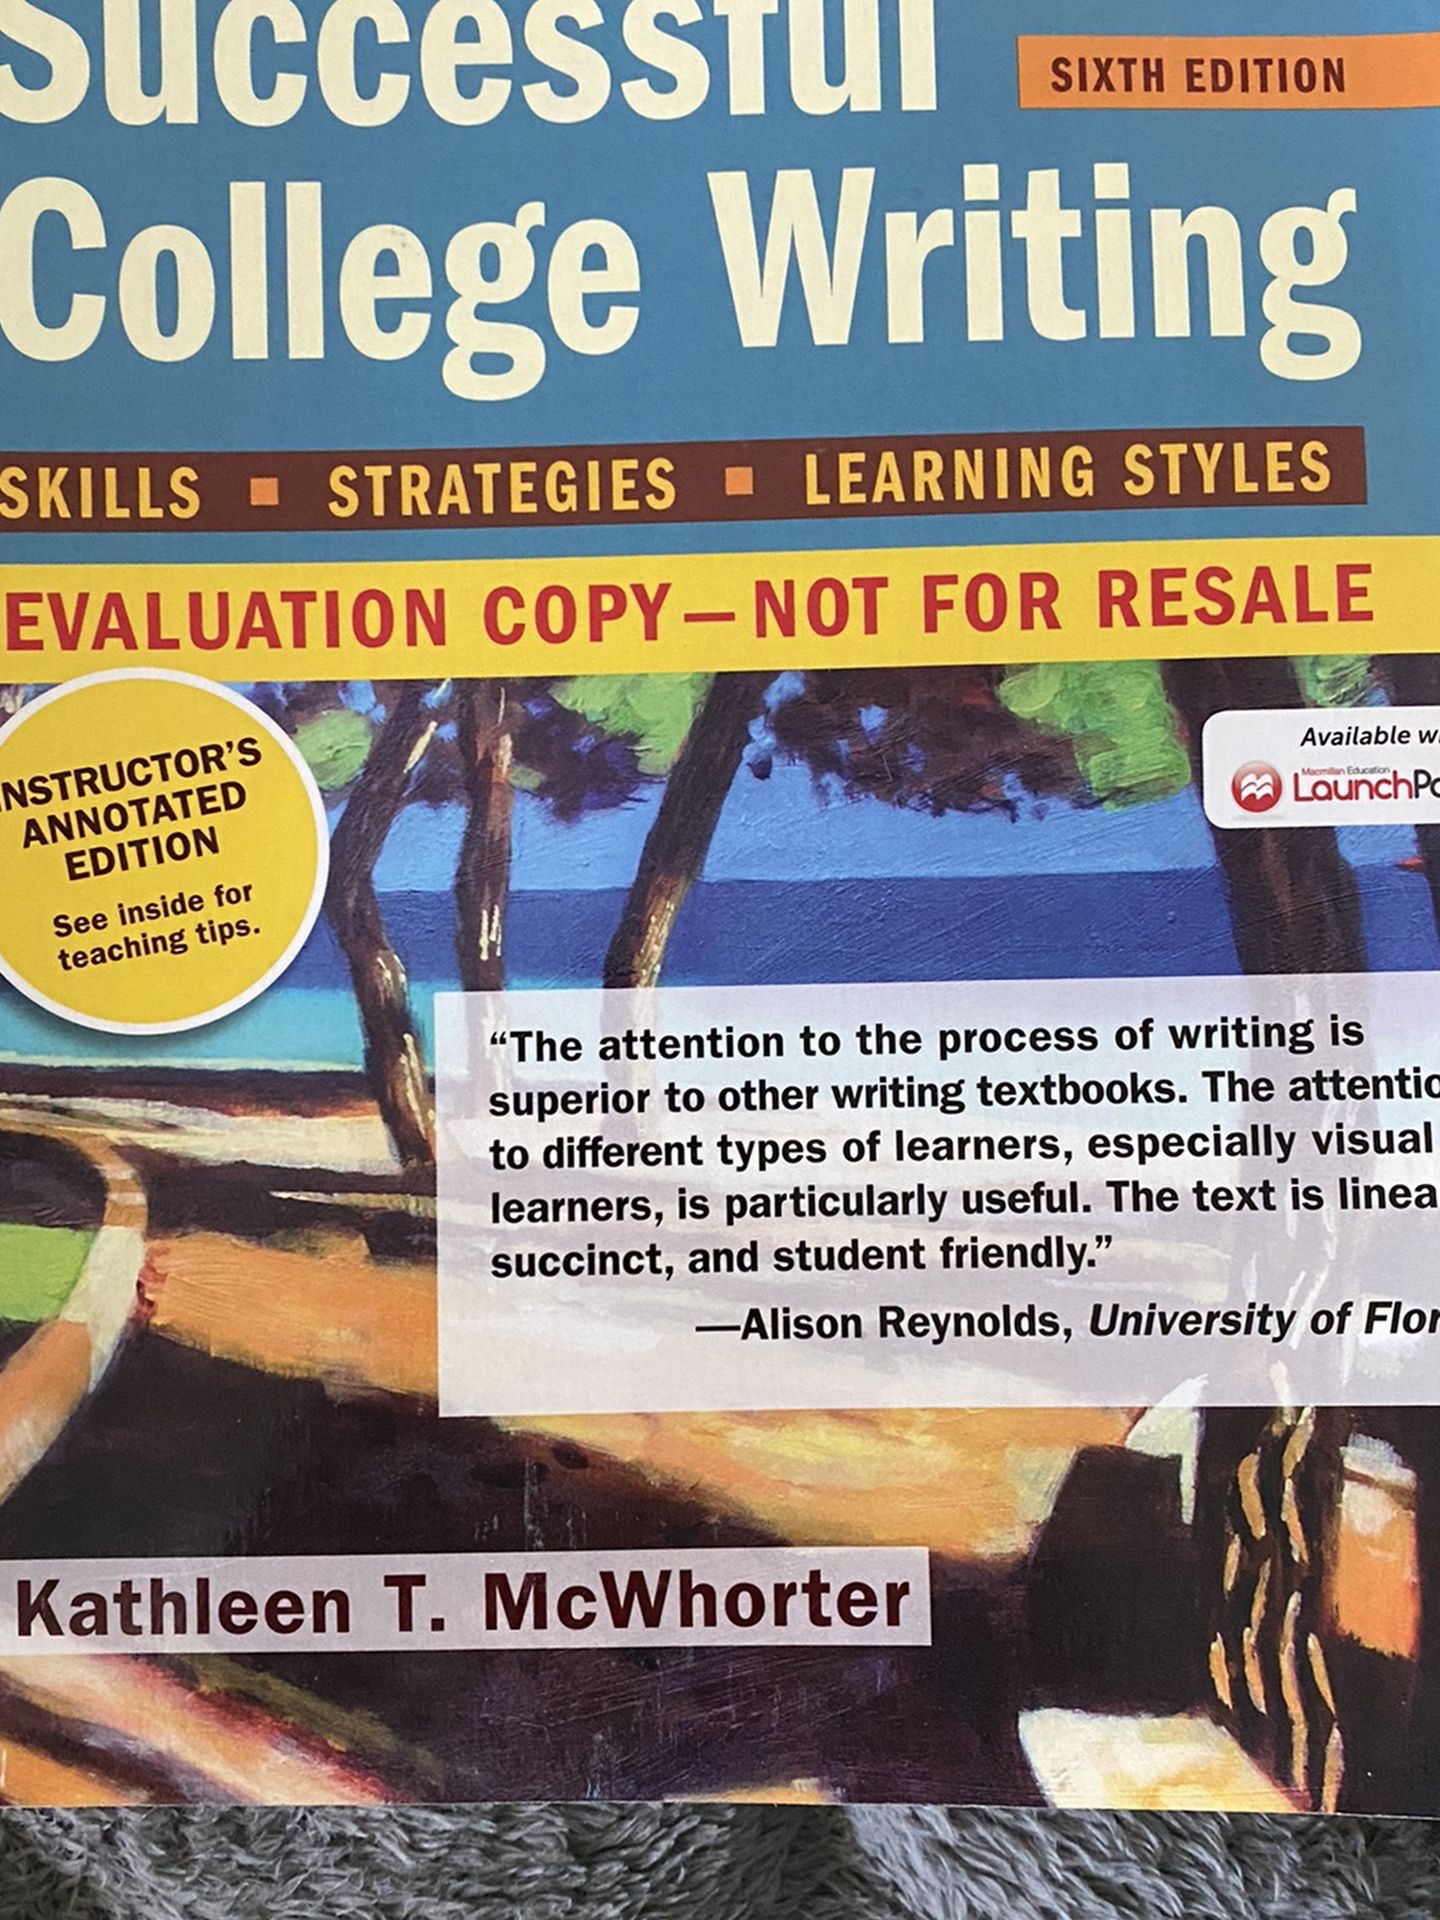 Successful College Writing Evaluation Copy